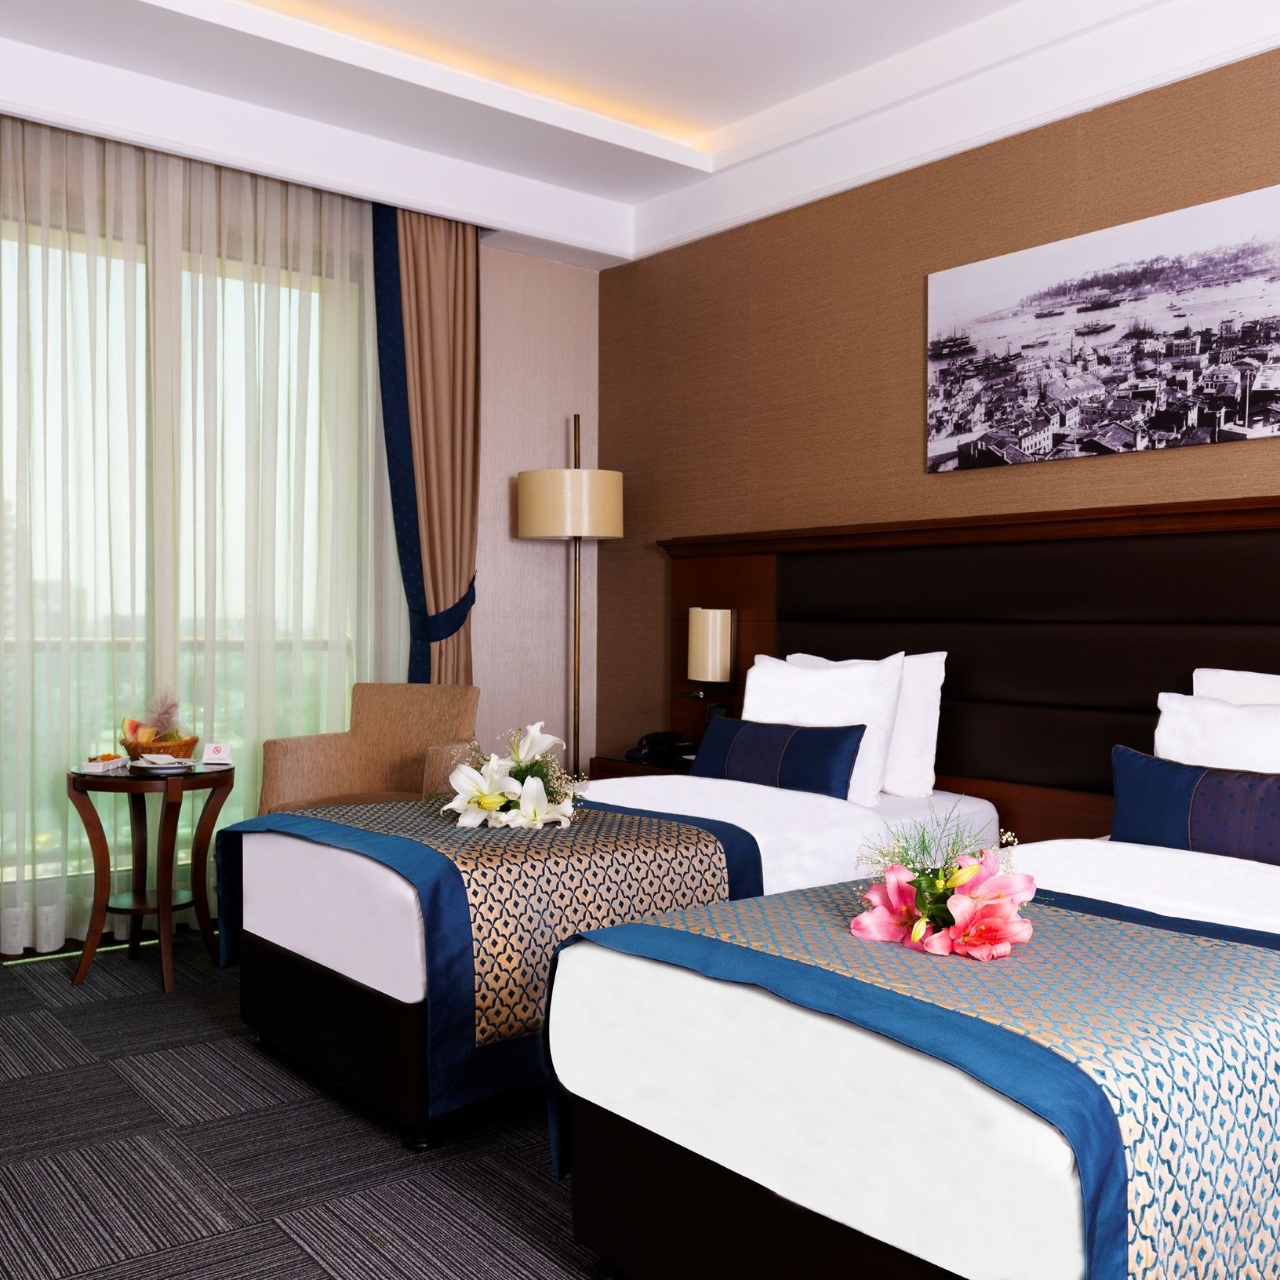 grand makel hotel topkapi bangkok at hrs with free services